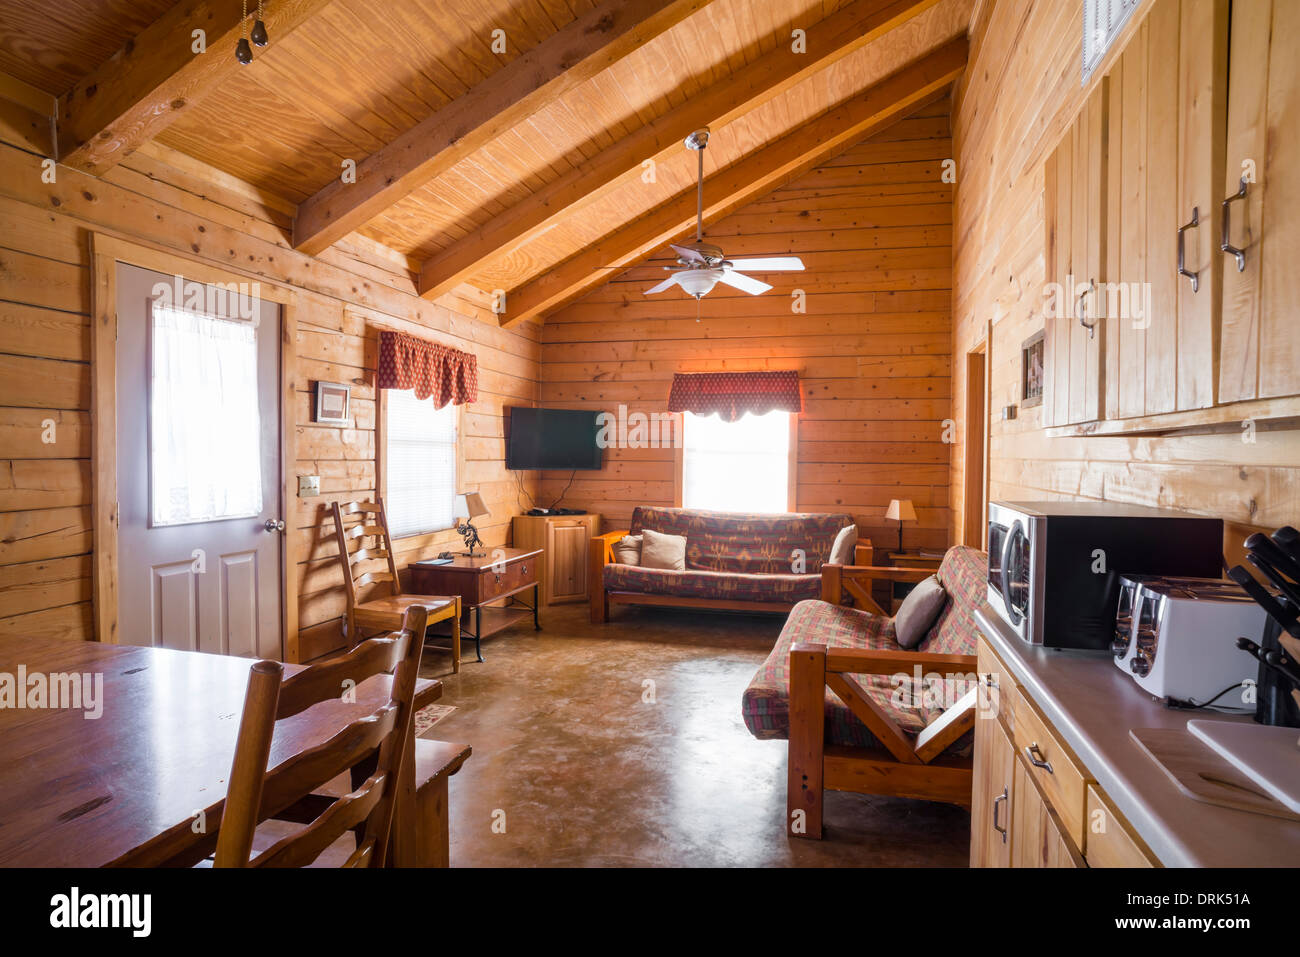 USA, Texas, interior of rustic log home cabin Stock Photo